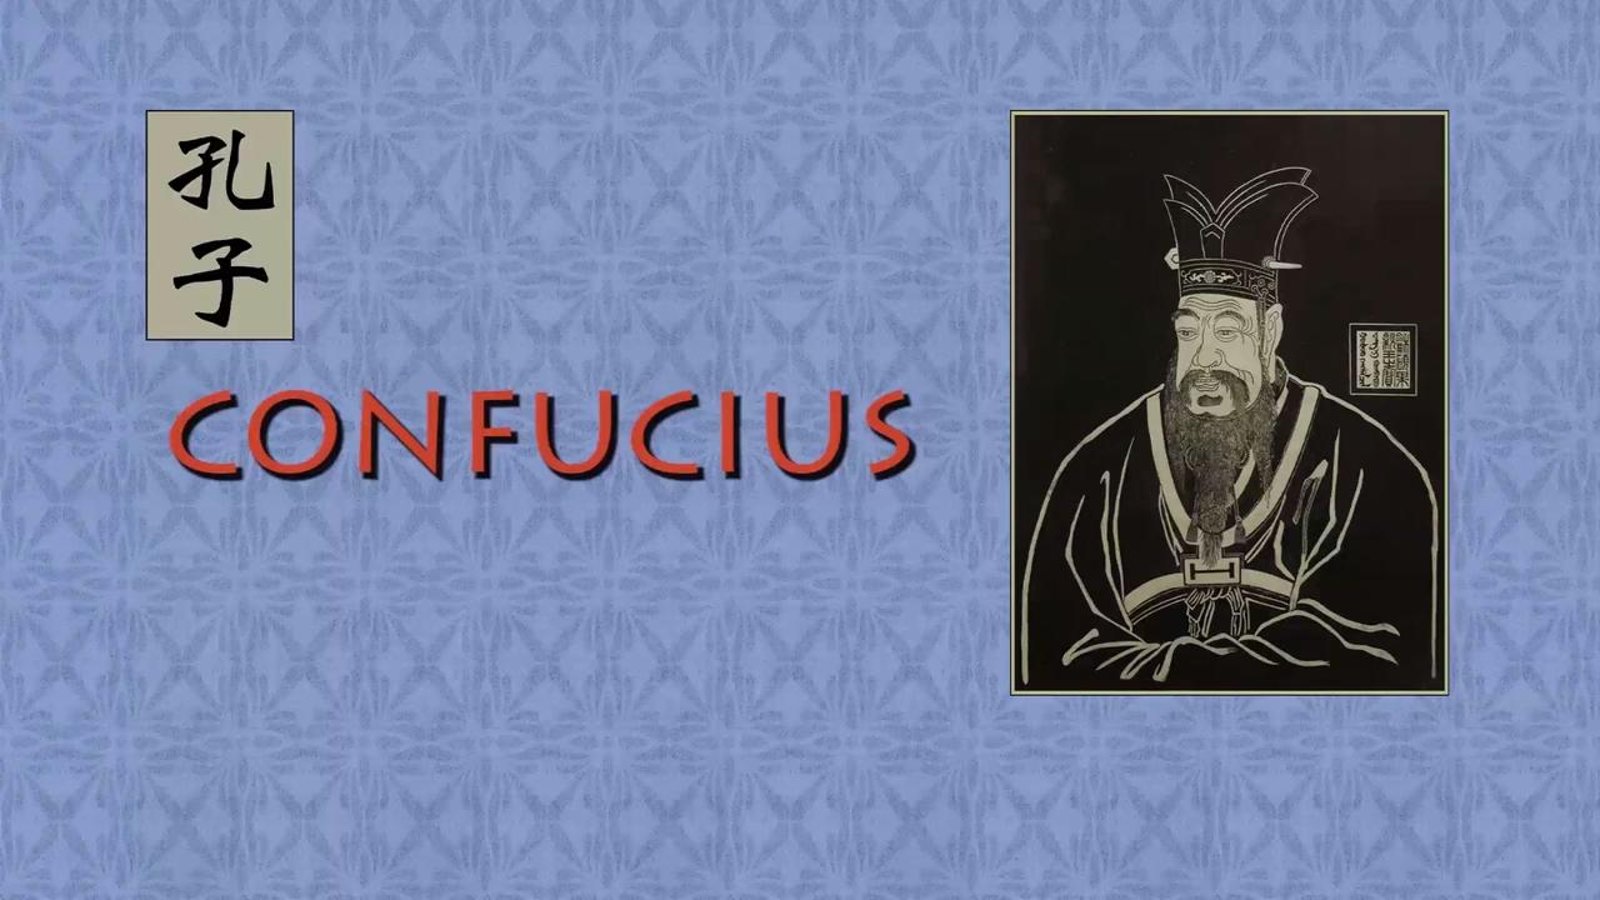 Confucius - The Life and Work of Confucius